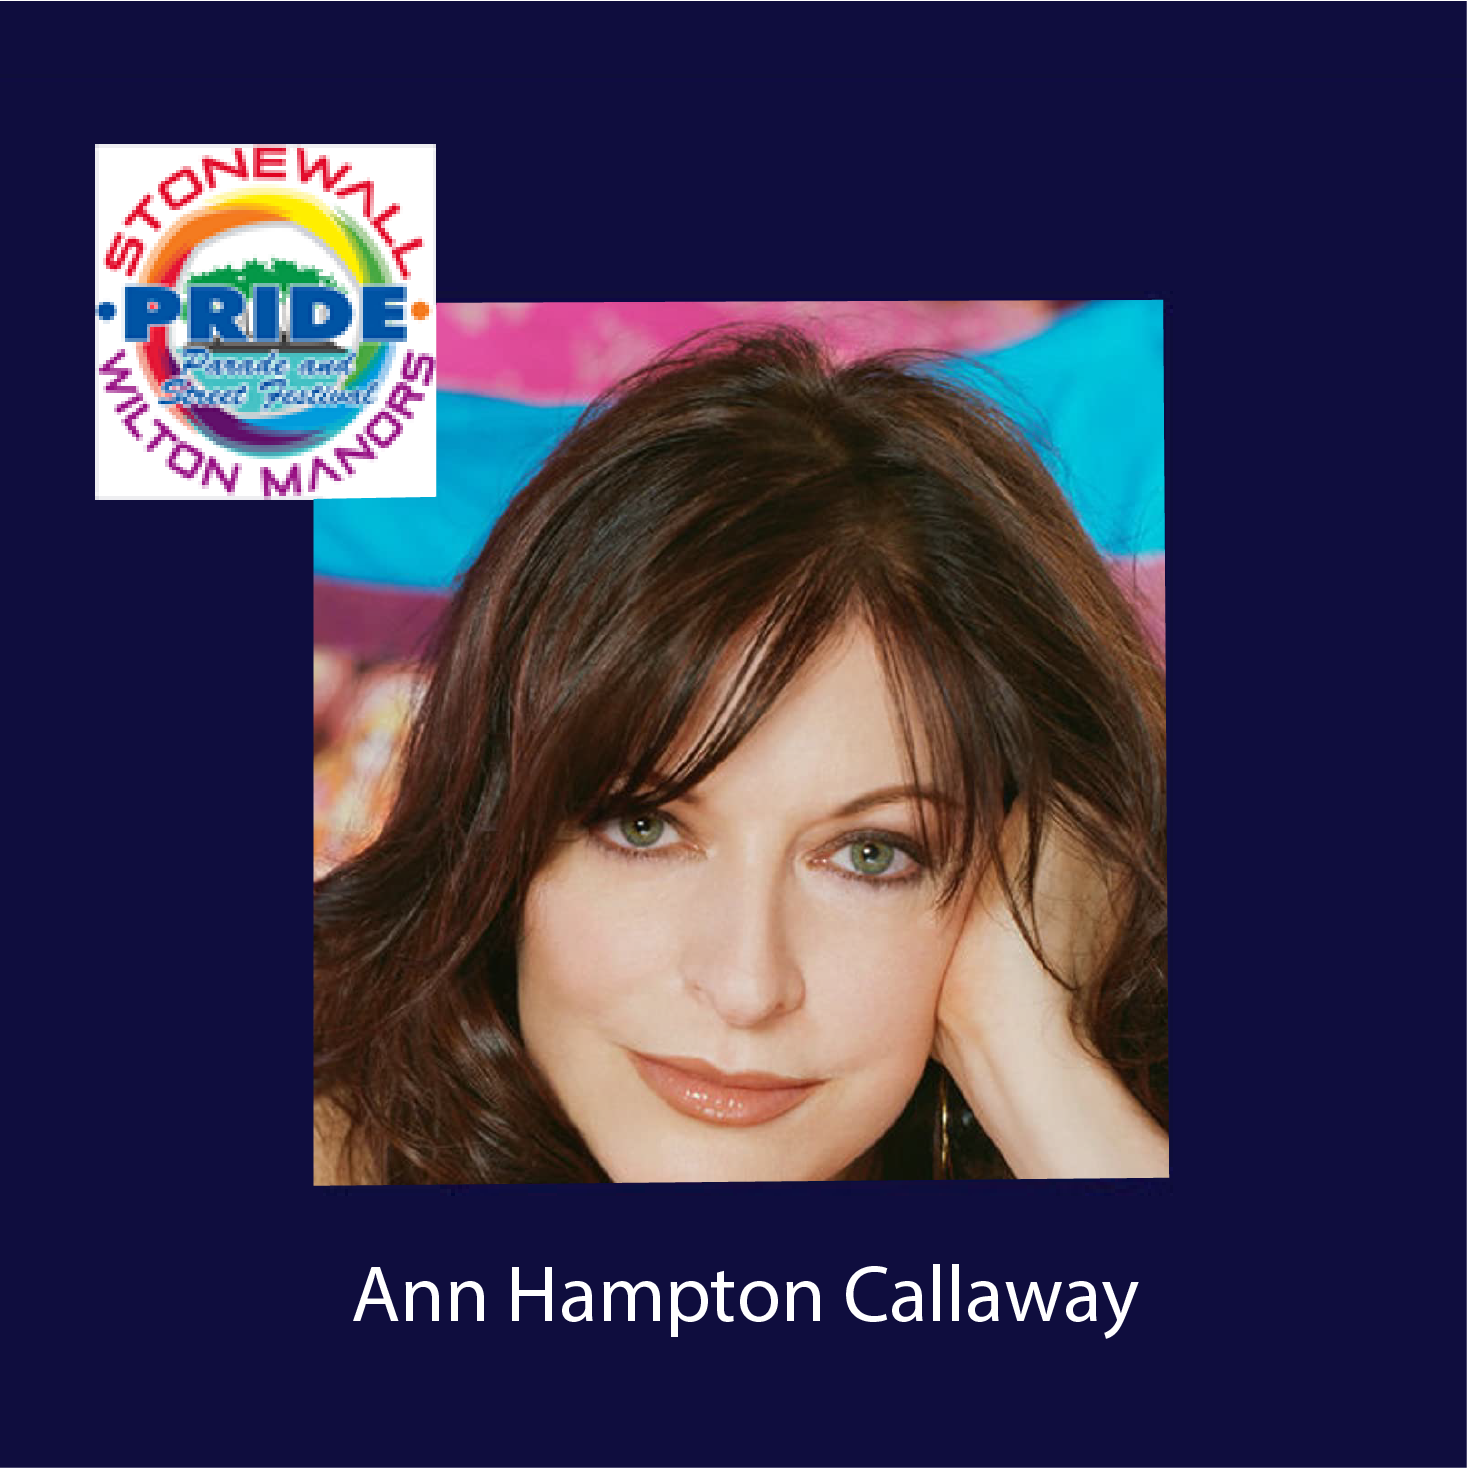 “Ann Hampton Callaway’s Love and Let Love: A Pride Celebration”